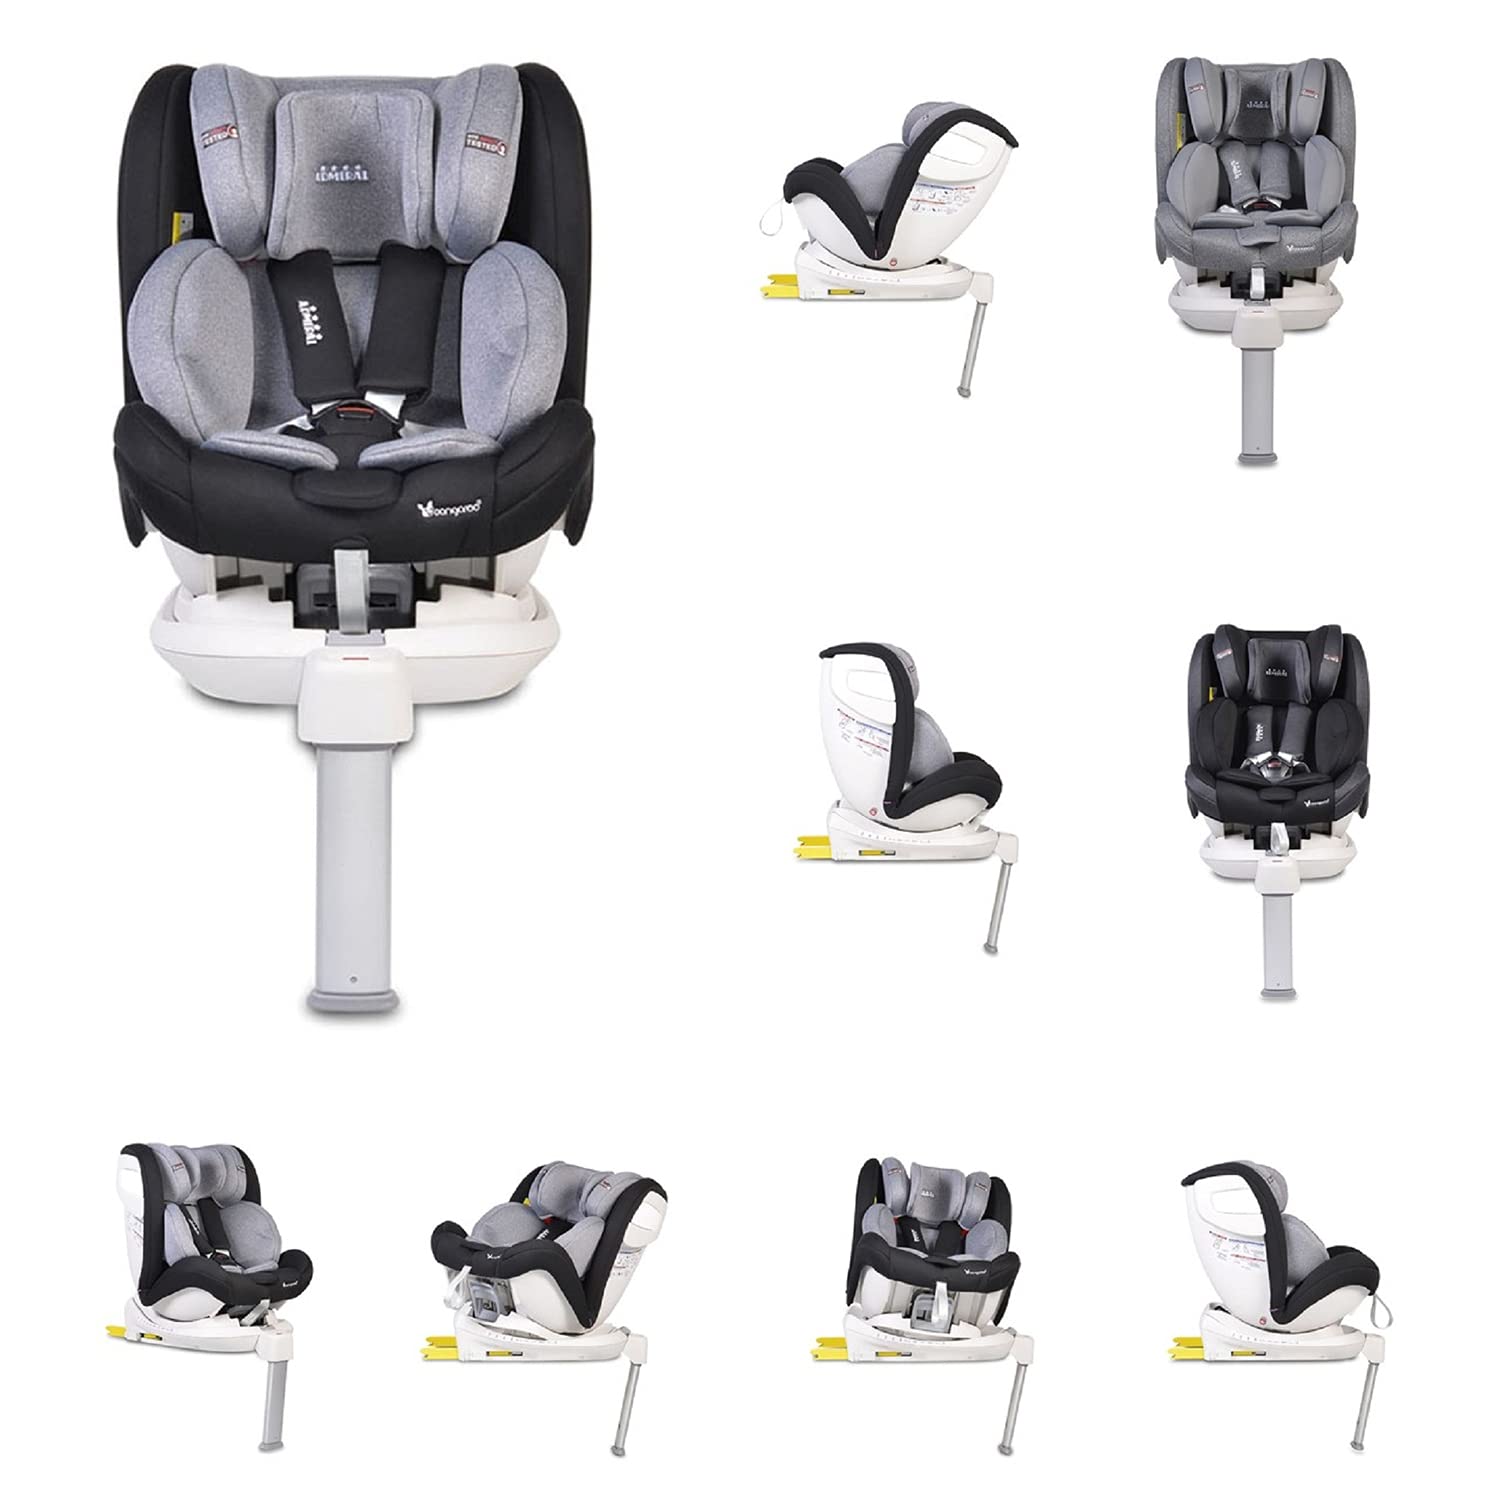 Cangaroo Admiral ISOFIX Child Seat Group 0/1/2/3 (0-36 kg) Rotatable Adjustable Colour: Dark Grey